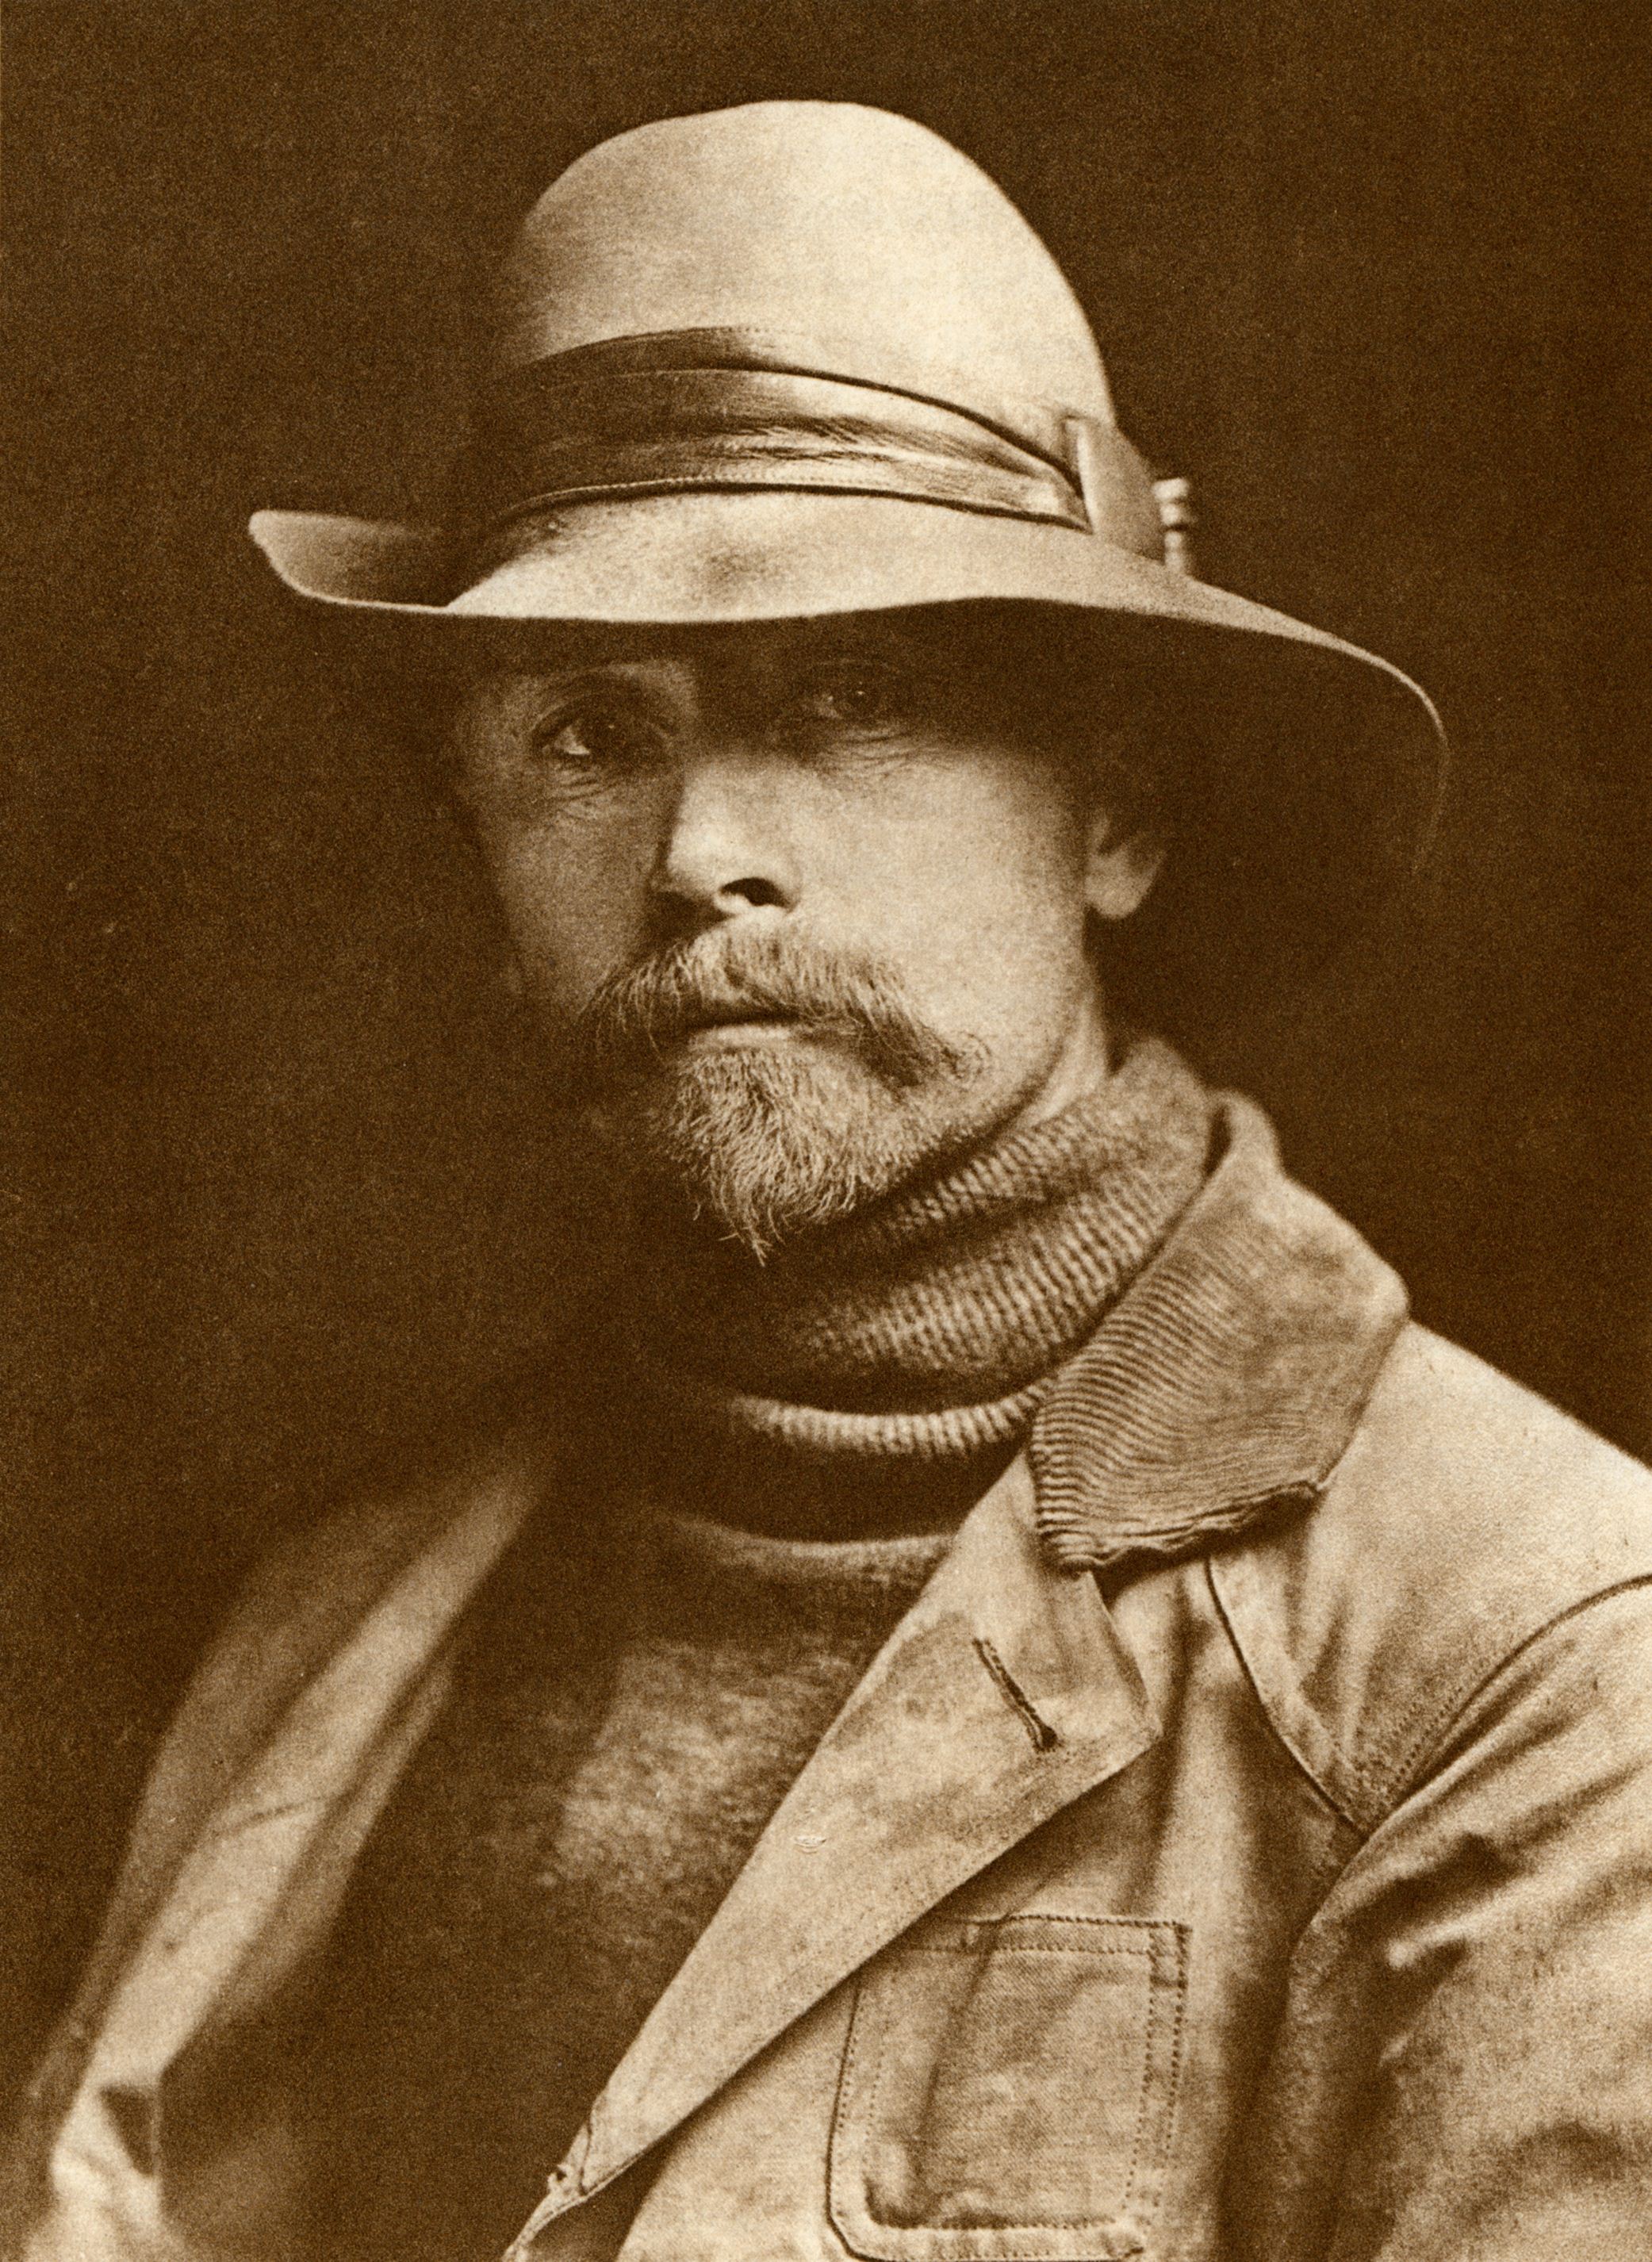 Edward Sheriff Curtis - self portrait photo